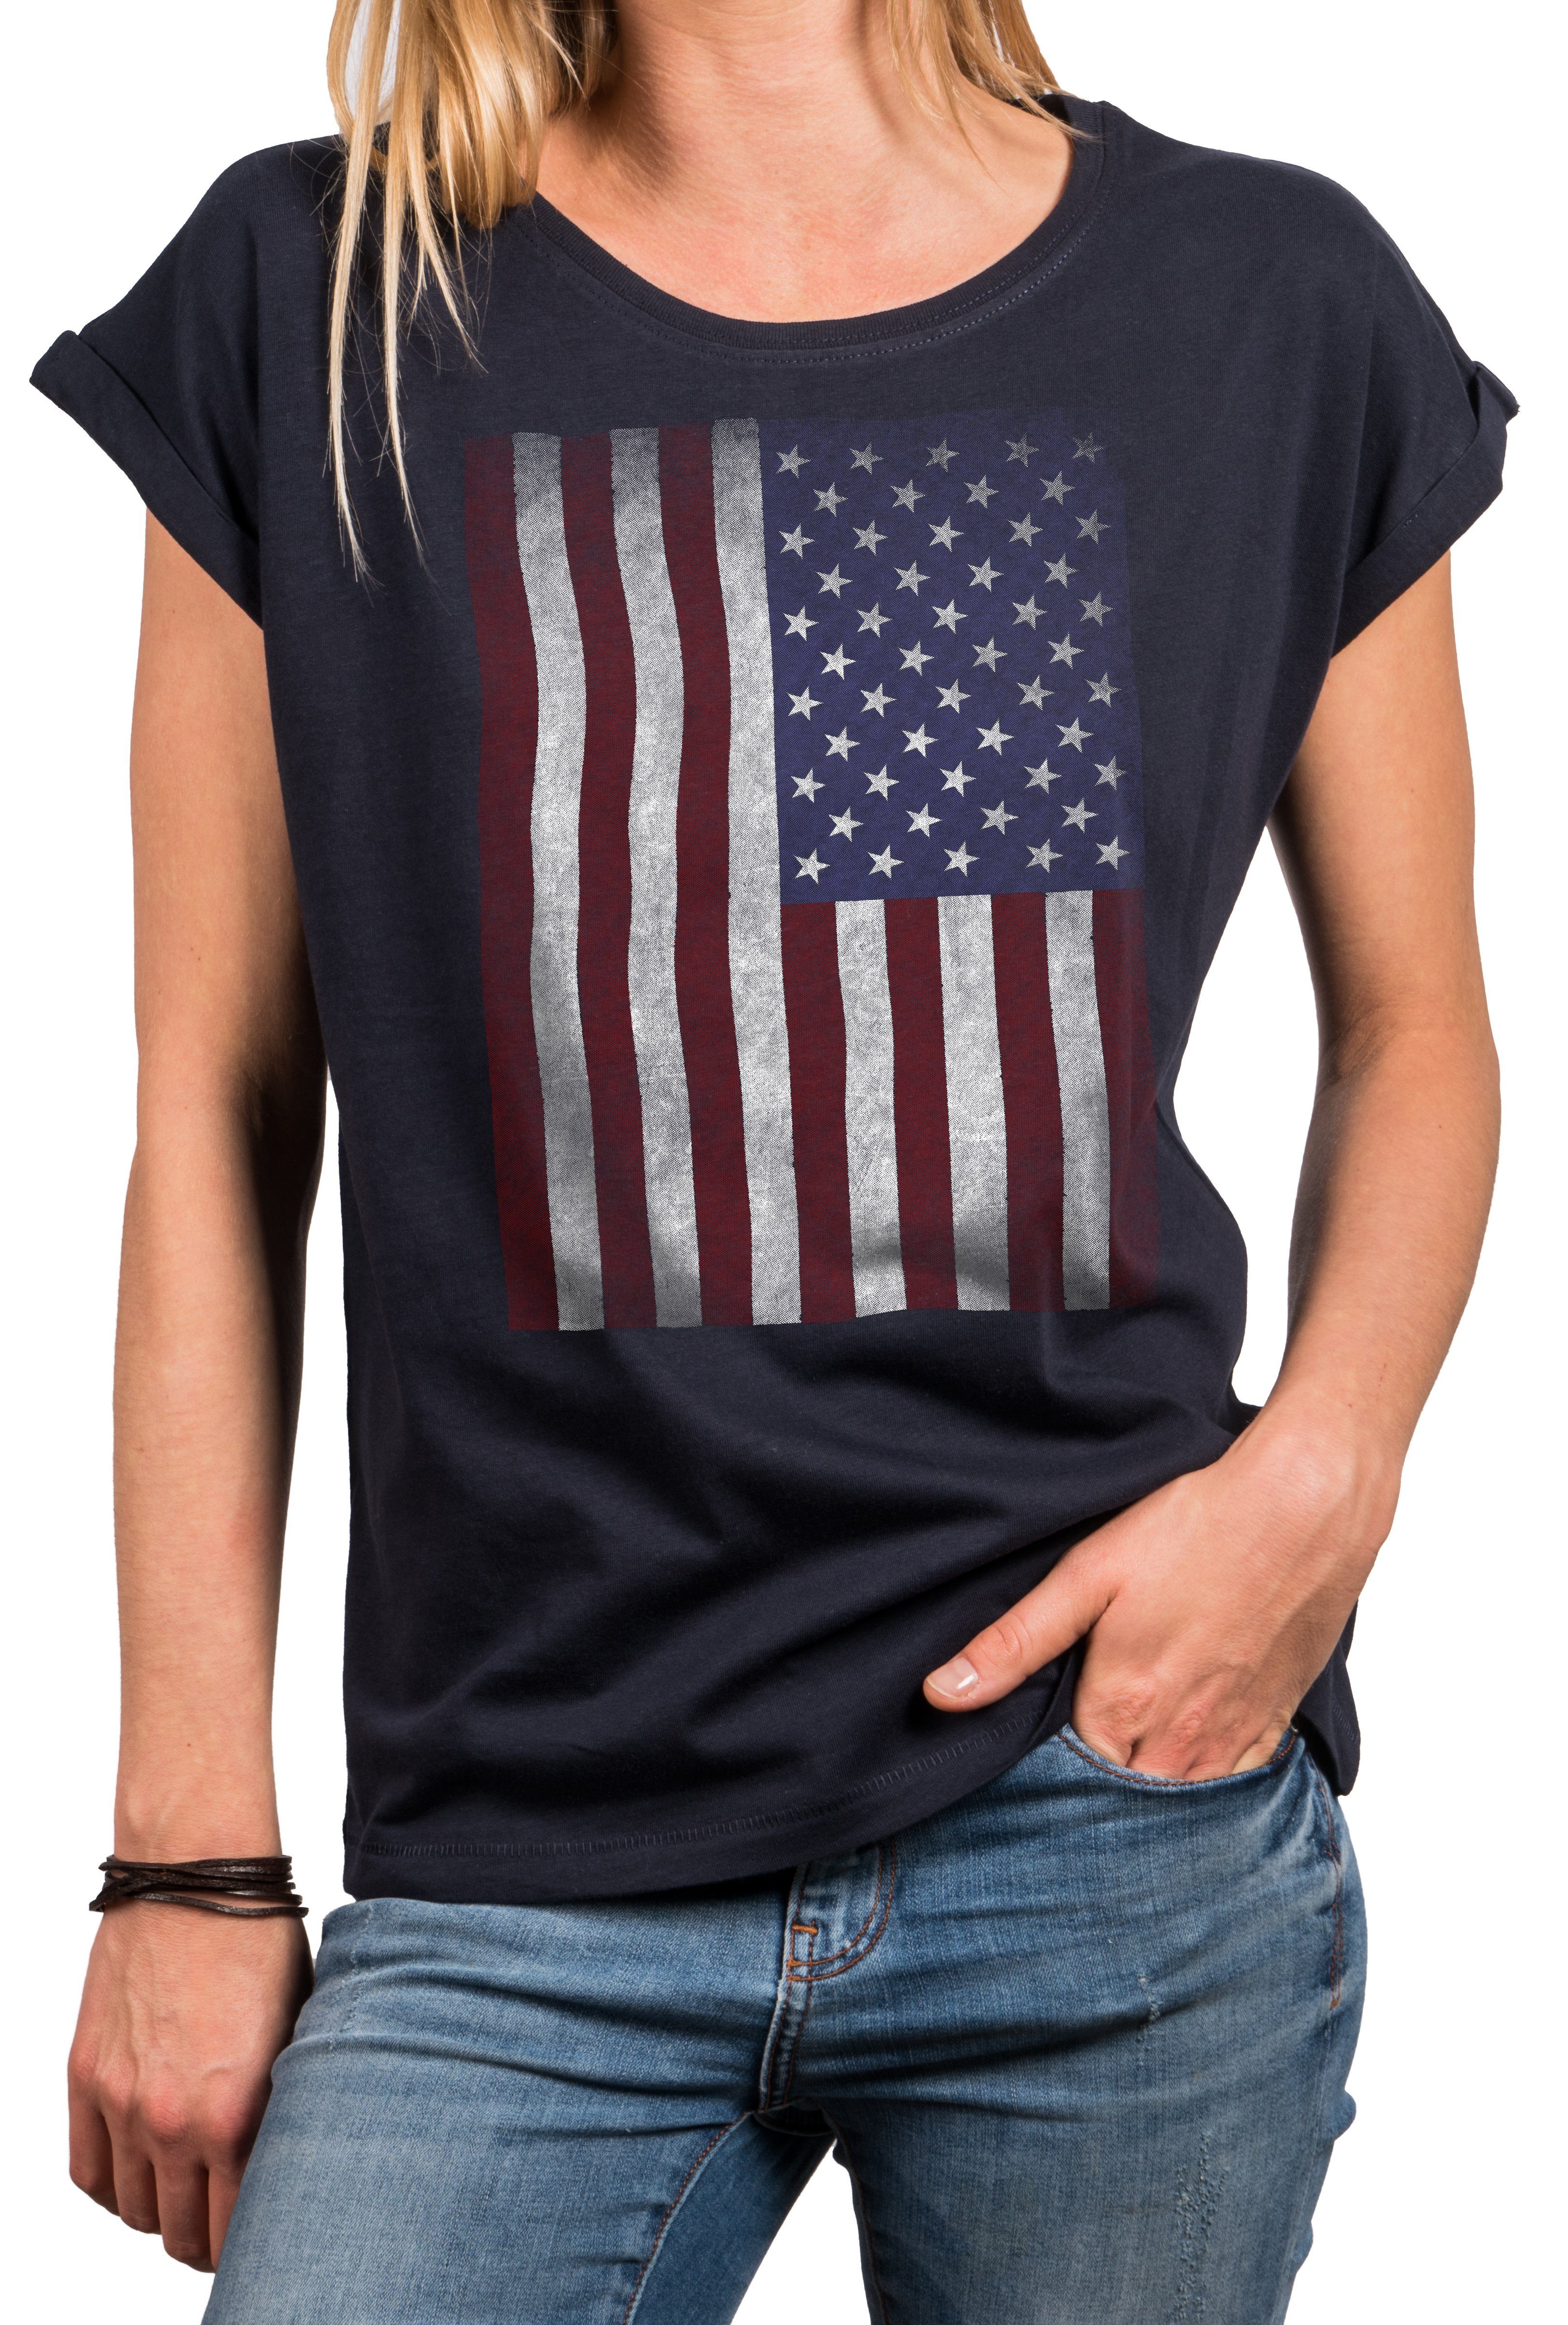 MAKAYA Print-Shirt Damen USA Flagge blau) Fahne grau, Größen (Kurzarm, Sommer Oberteile schwarz, große Tunika Top Vintage Amerika Baumwolle